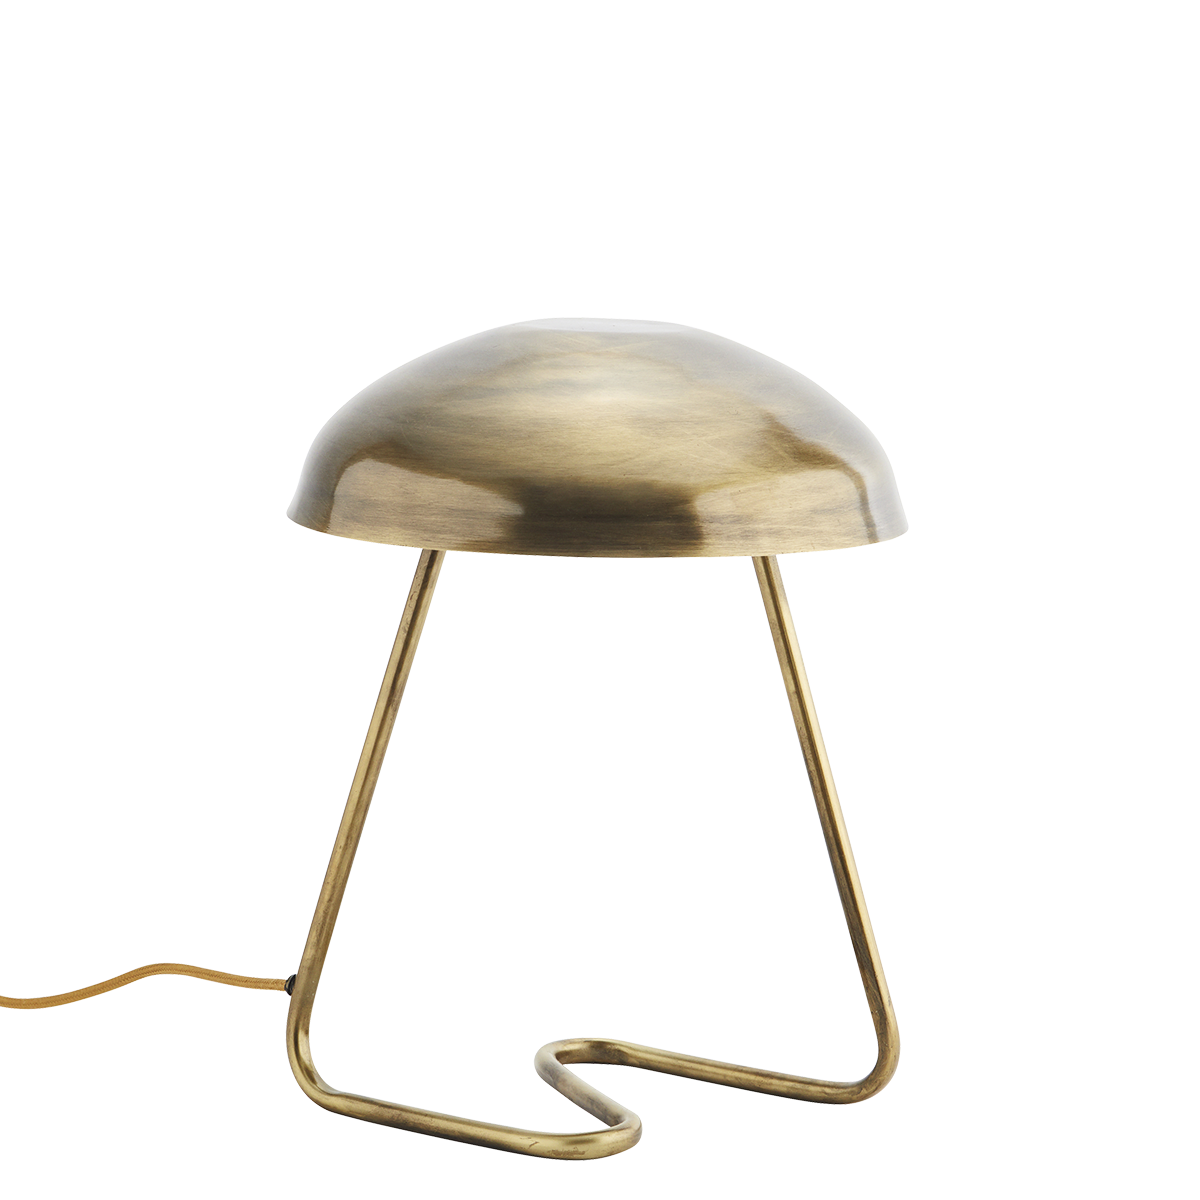 Iron table lamp